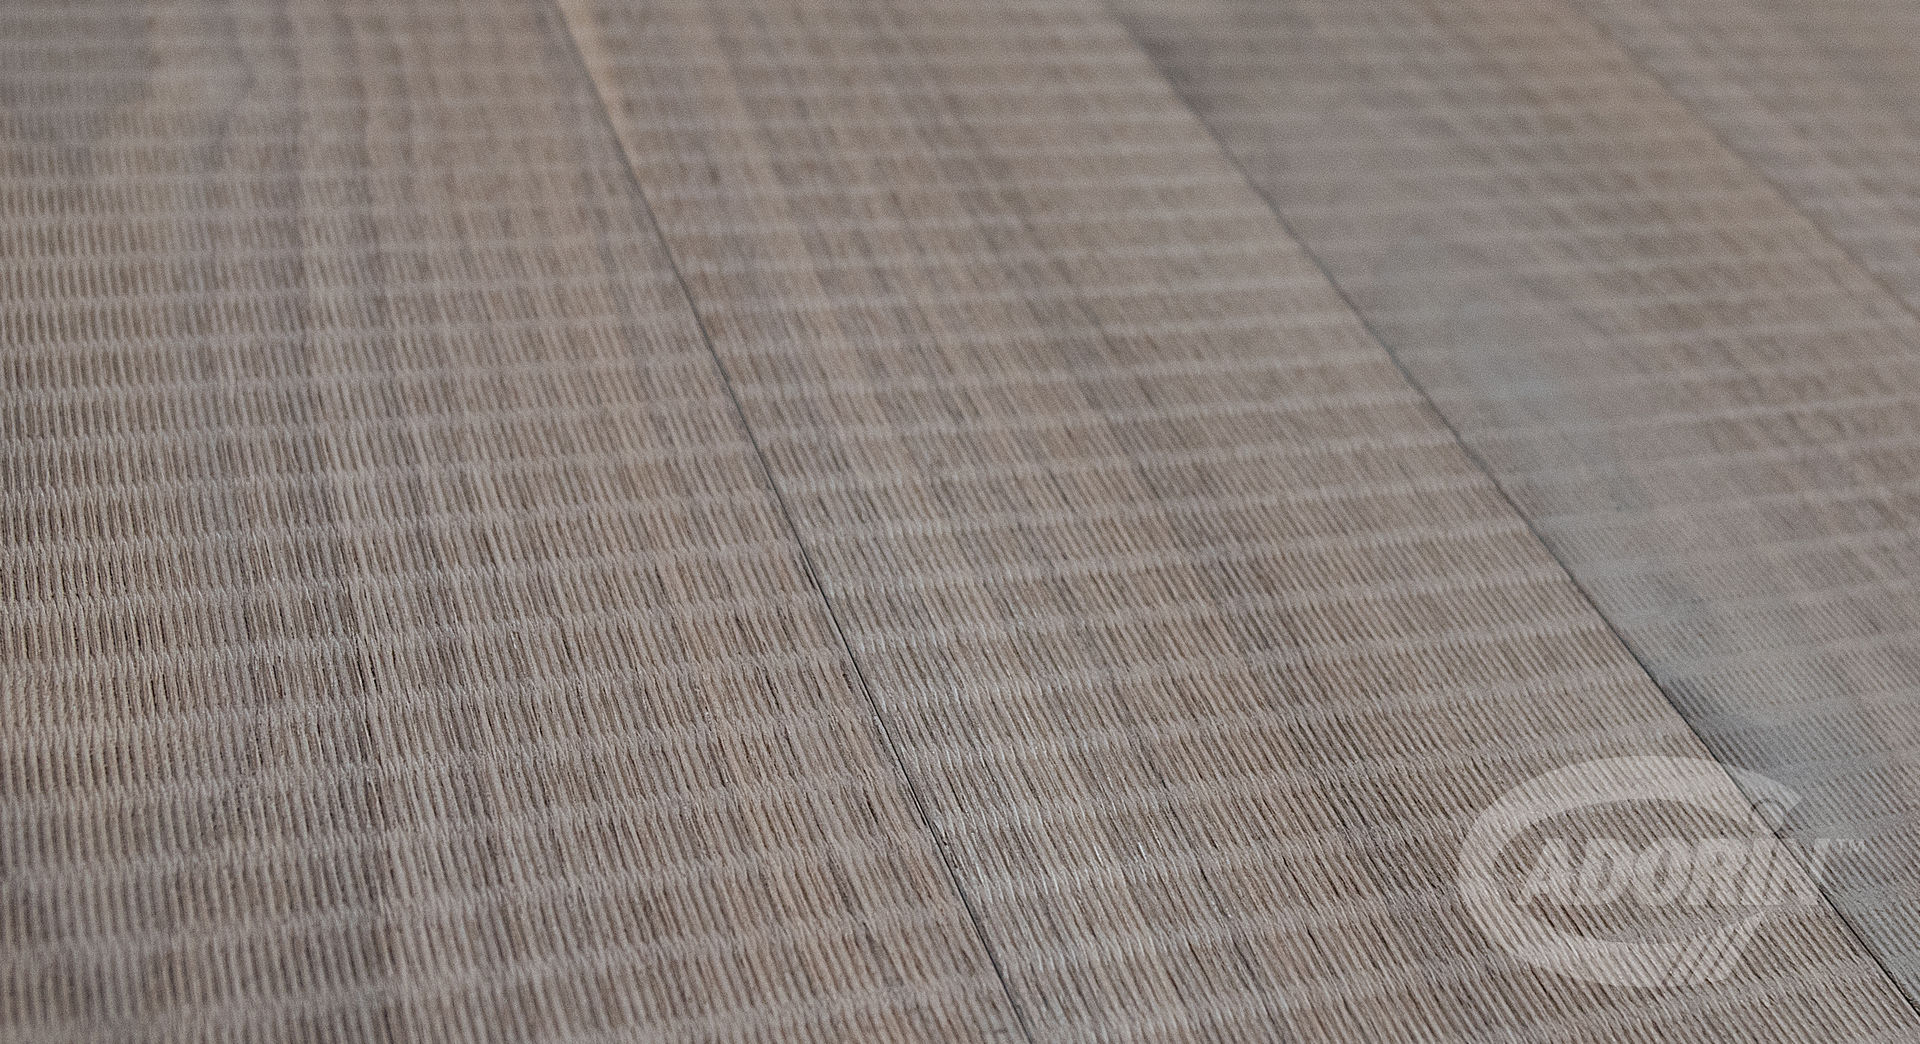 Tatami - Walnut Cadorin Group Srl - Italian craftsmanship production Wood flooring and Coverings Підлоги Дерево Дерев'яні